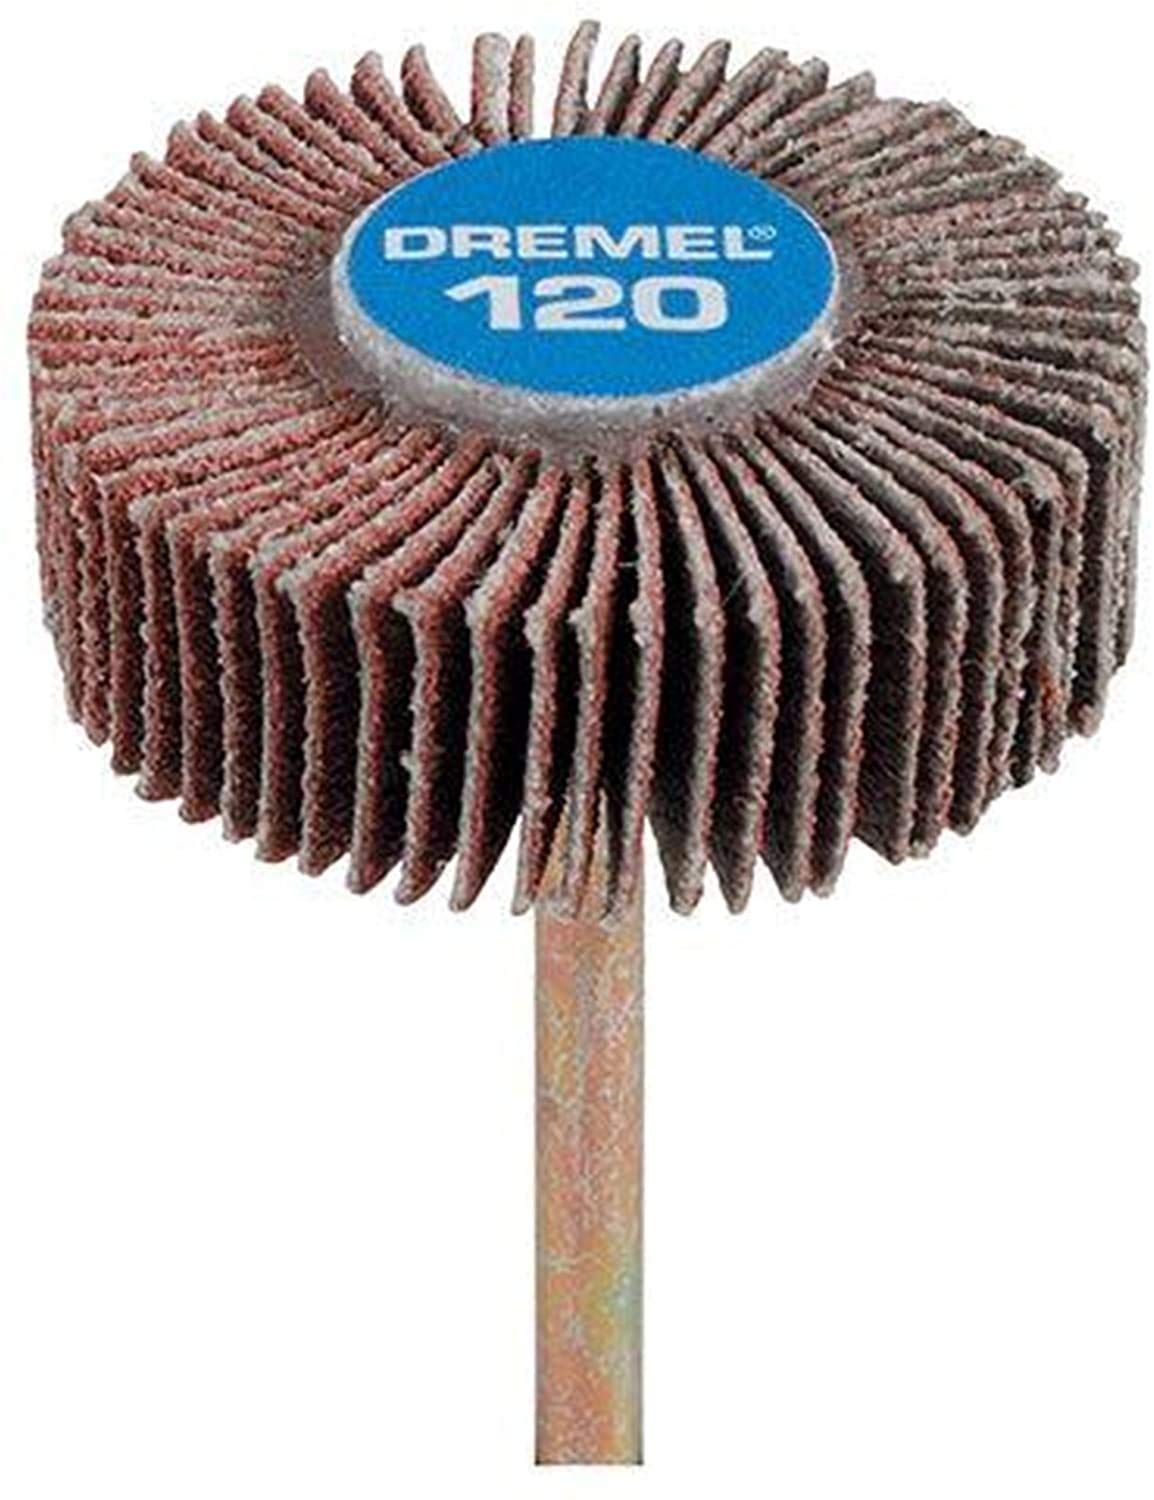 Dremel 503 3/8 inch 120-Grit Rotary Sanding Flapwheel Accessory - image 2 of 3